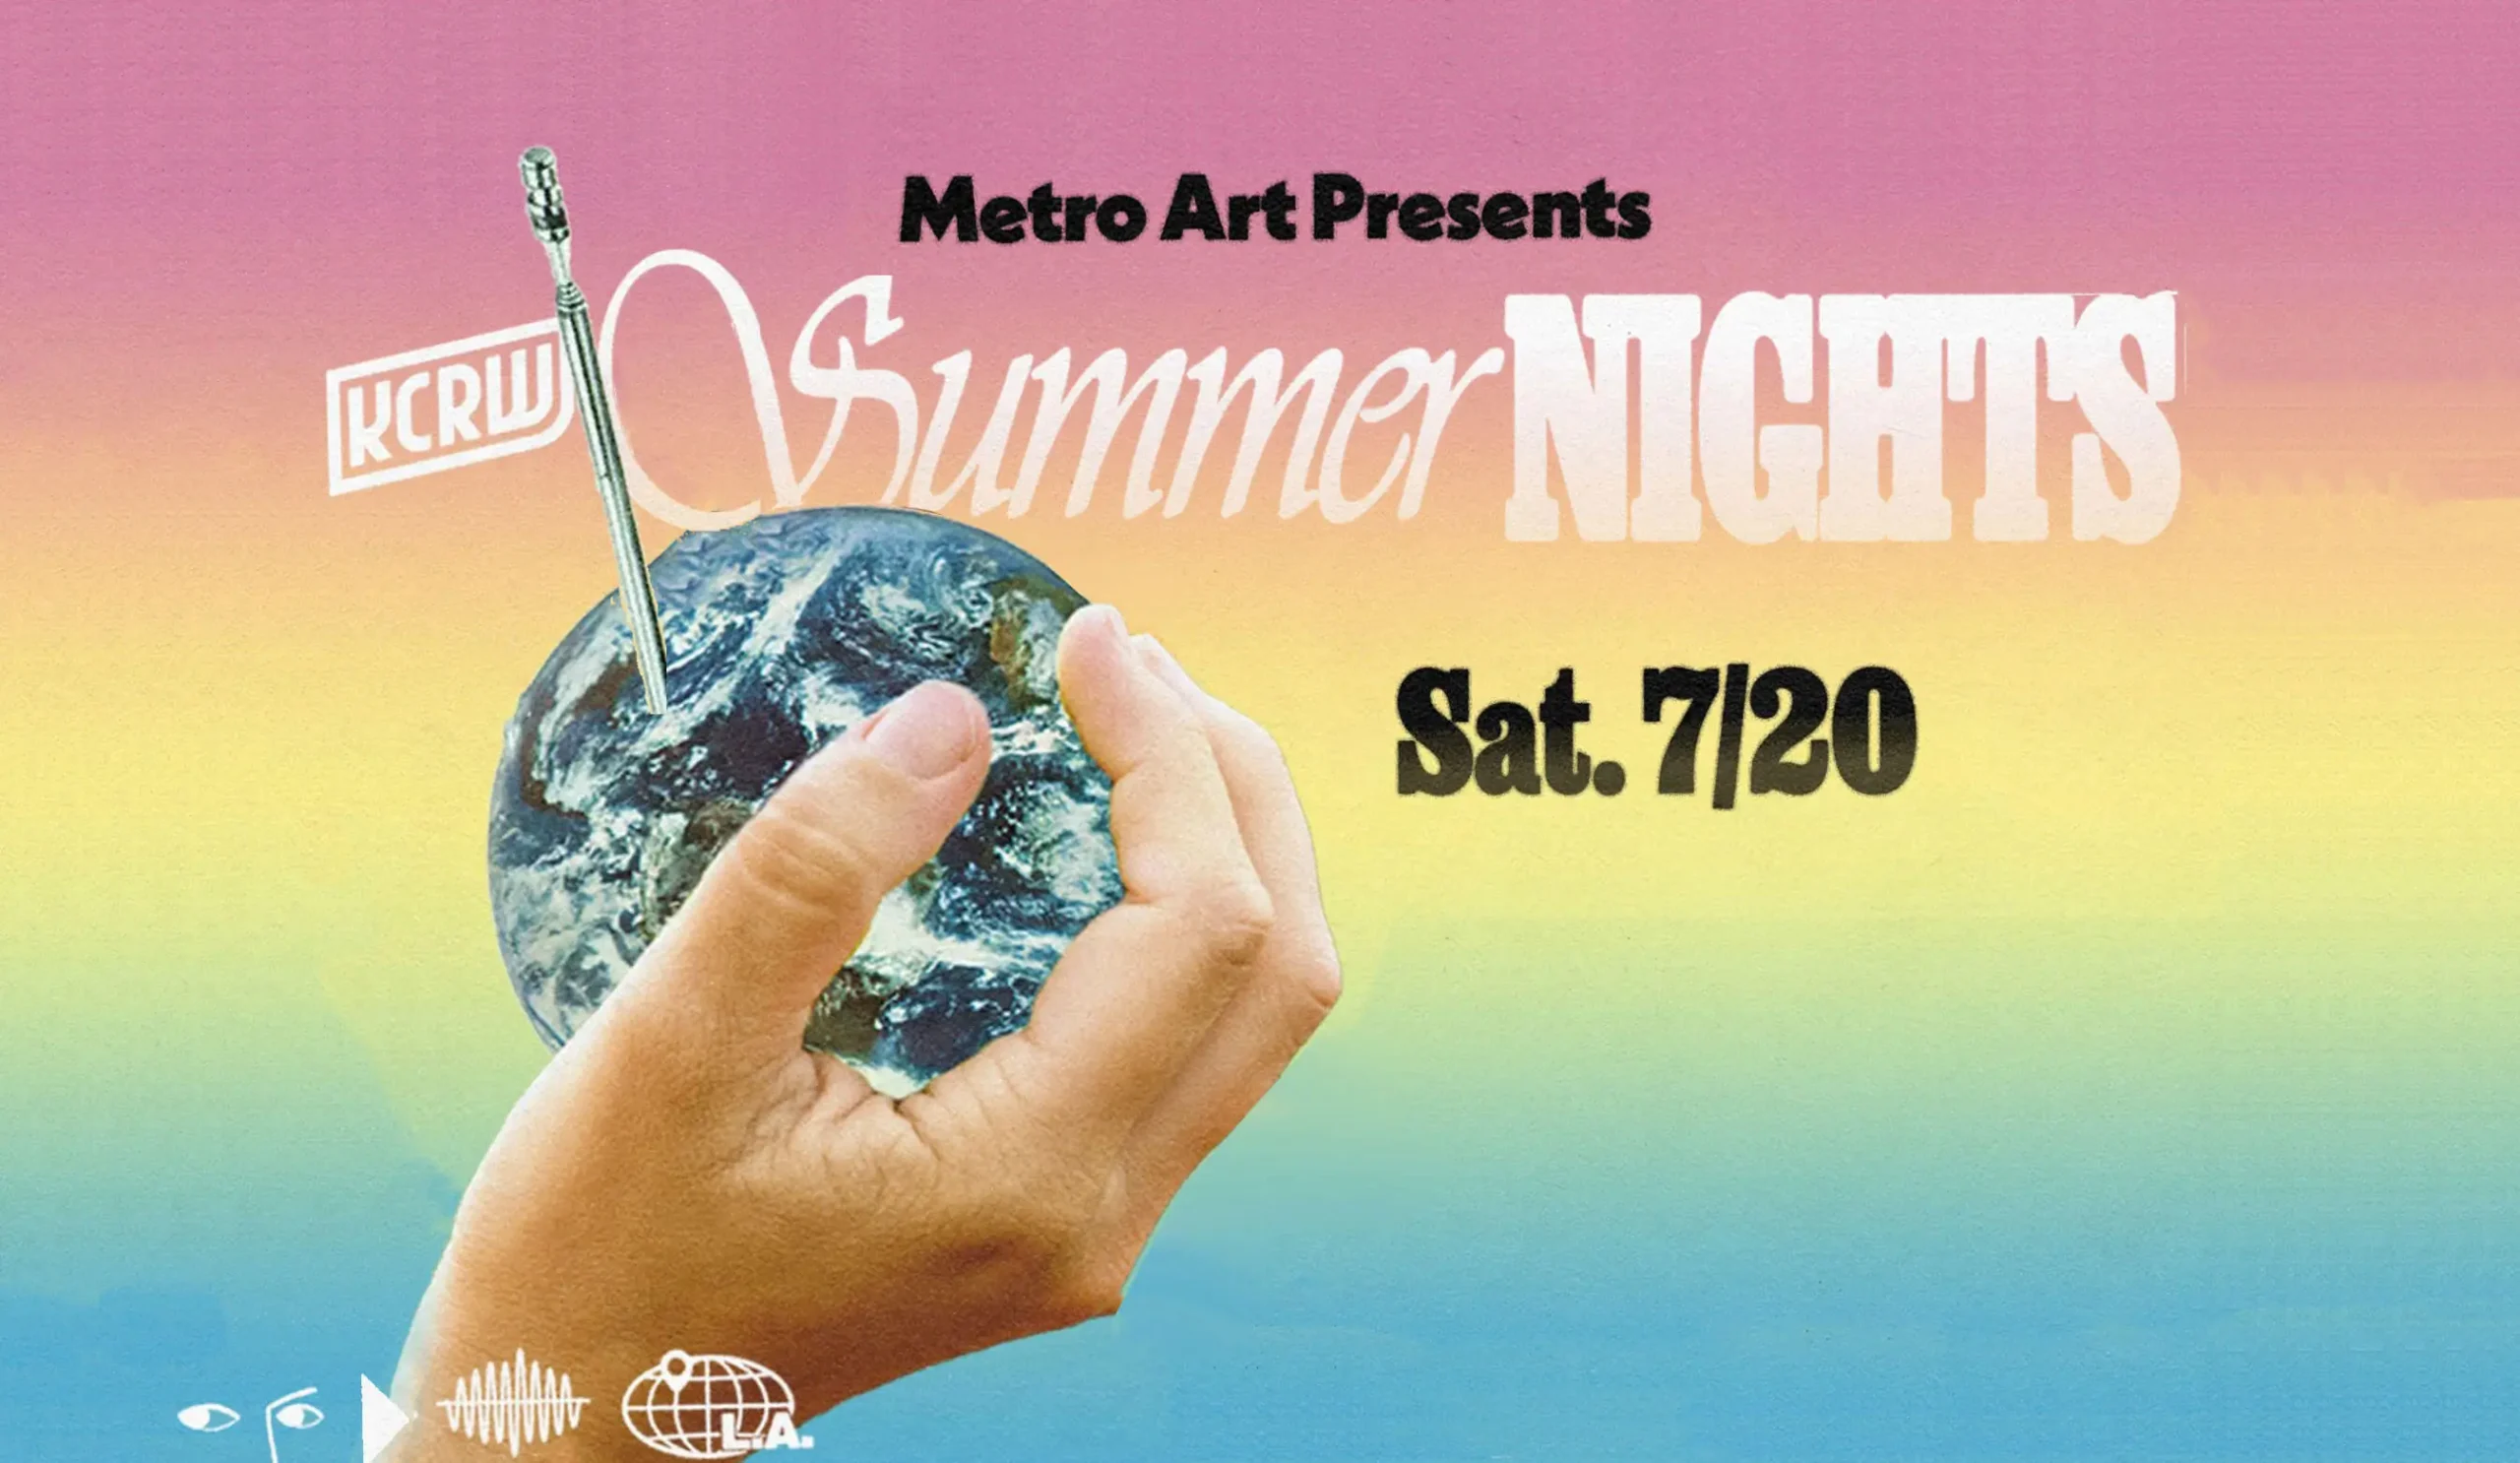 Metro Art Presents KCRW Summer nights